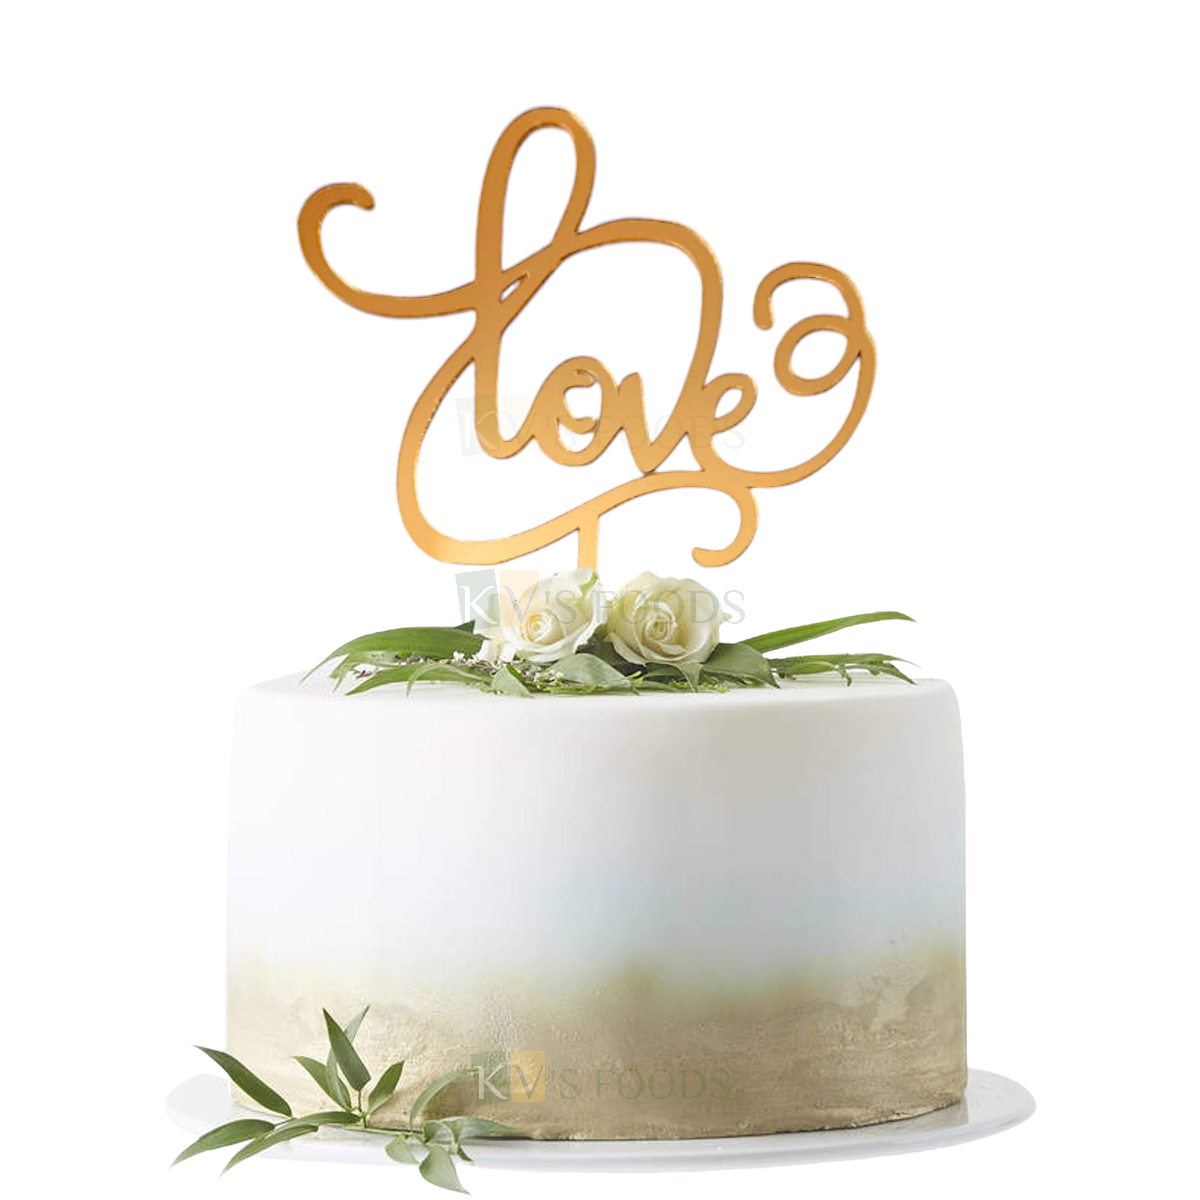 1PC Golden Acrylic Shiny Glass Finish Love Cake Topper, Happy Anniversary Cake Theme Love Valentine's Day Cake Insert Unique Elegant Font Design Cake Topper DIY Wedding Engagement Cake Decorations